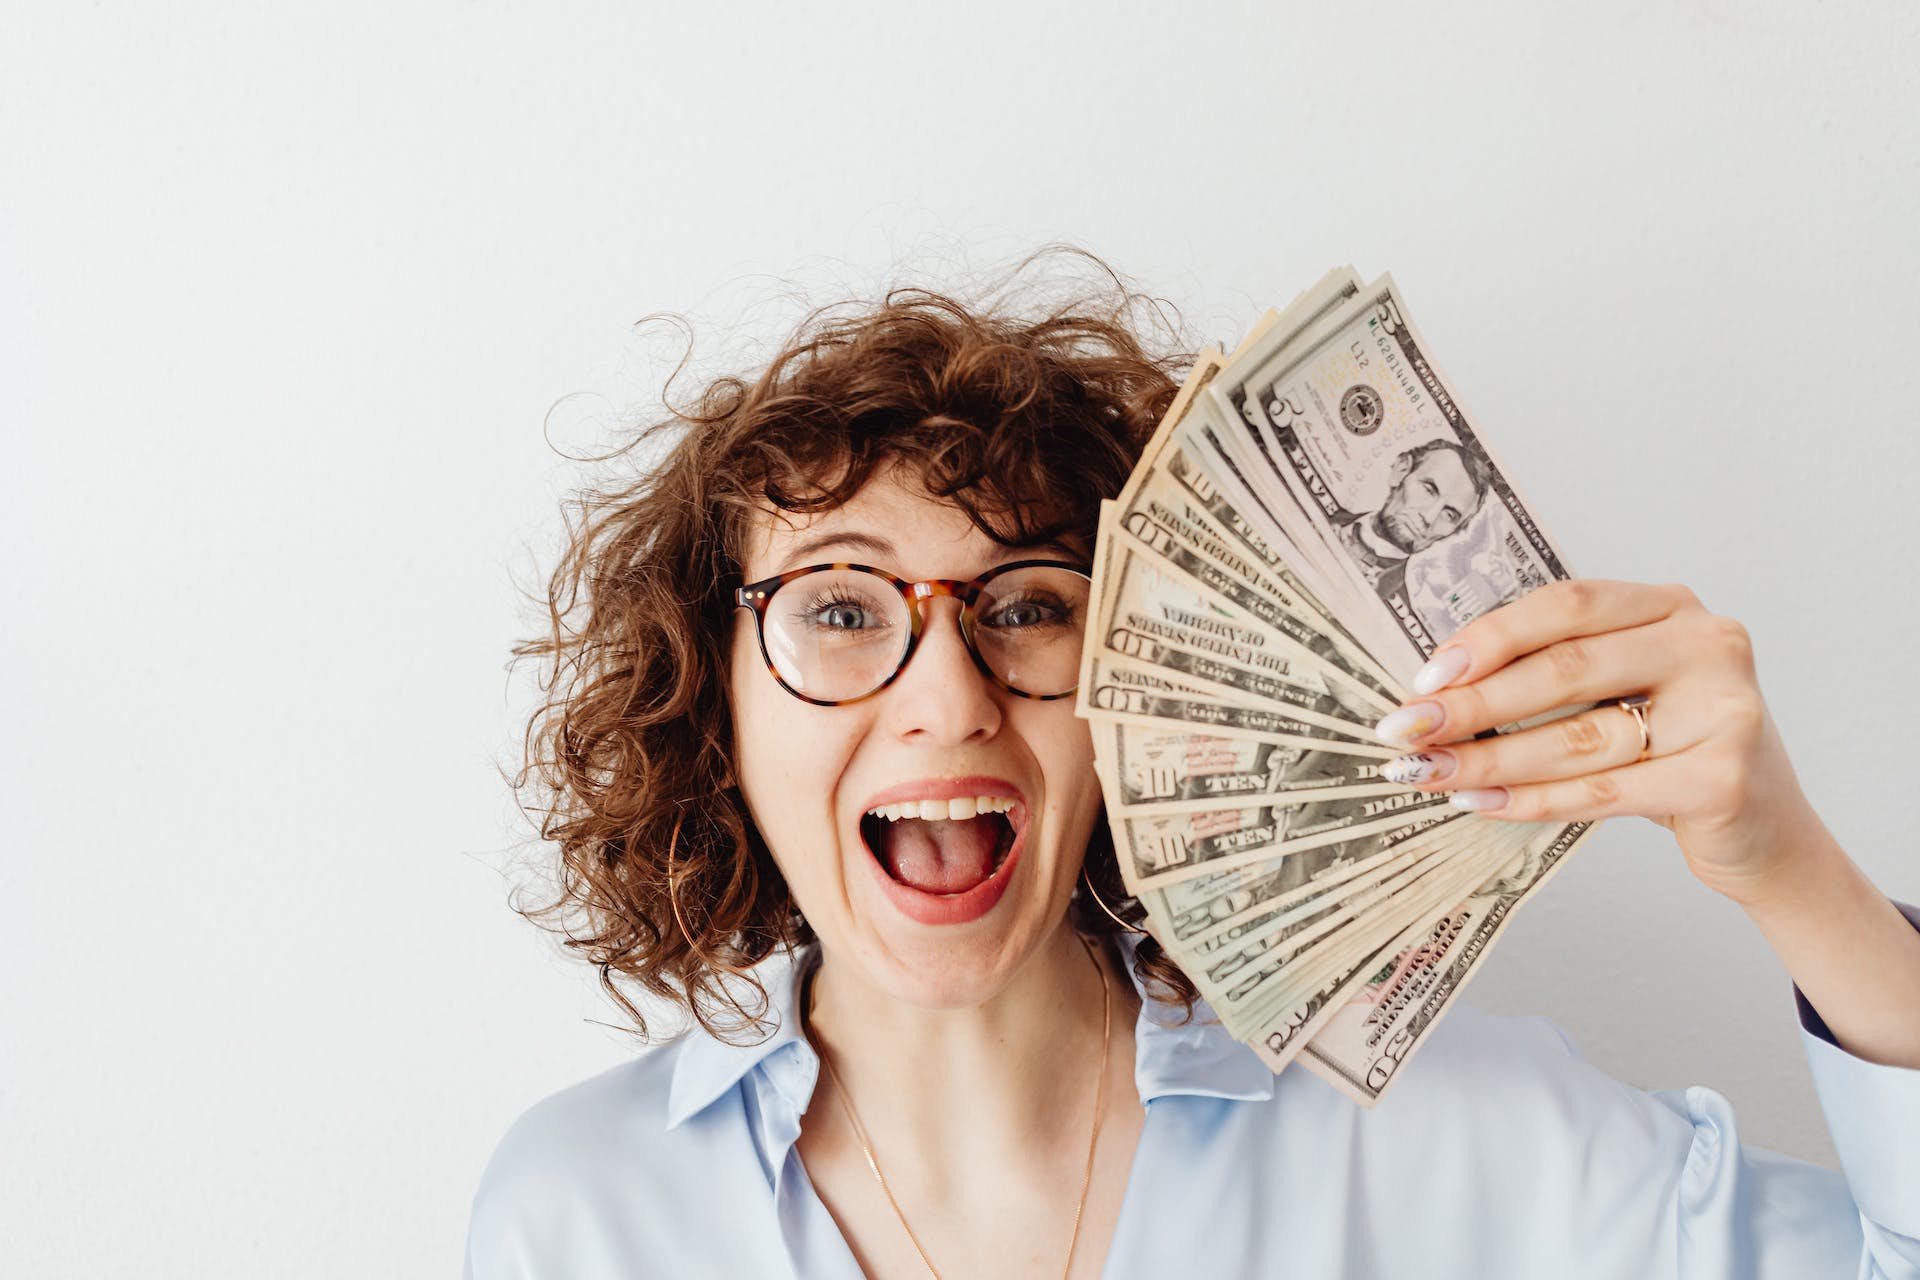 A happy woman holding dollar bills | Source: Pexels